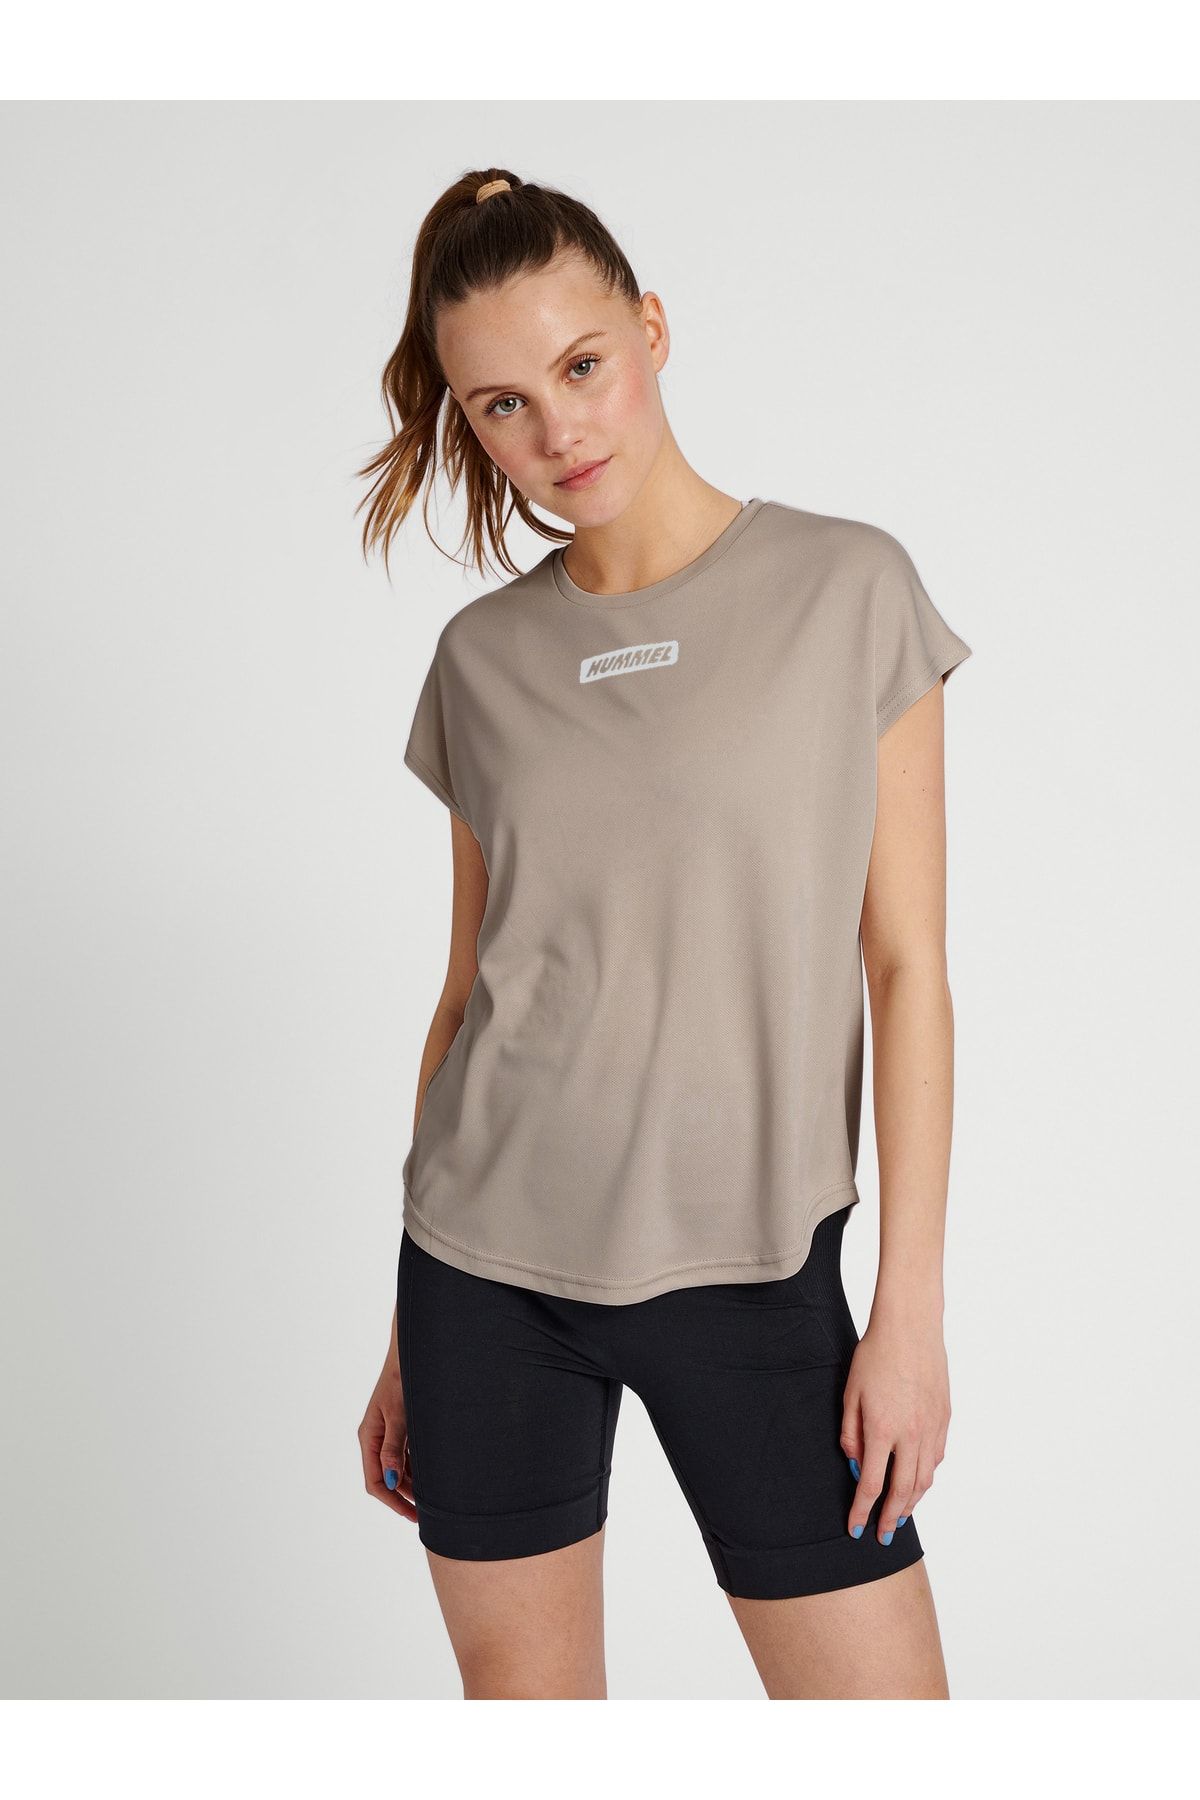 HUMMEL T-Shirt - Beige - Relaxed fit - Trendyol